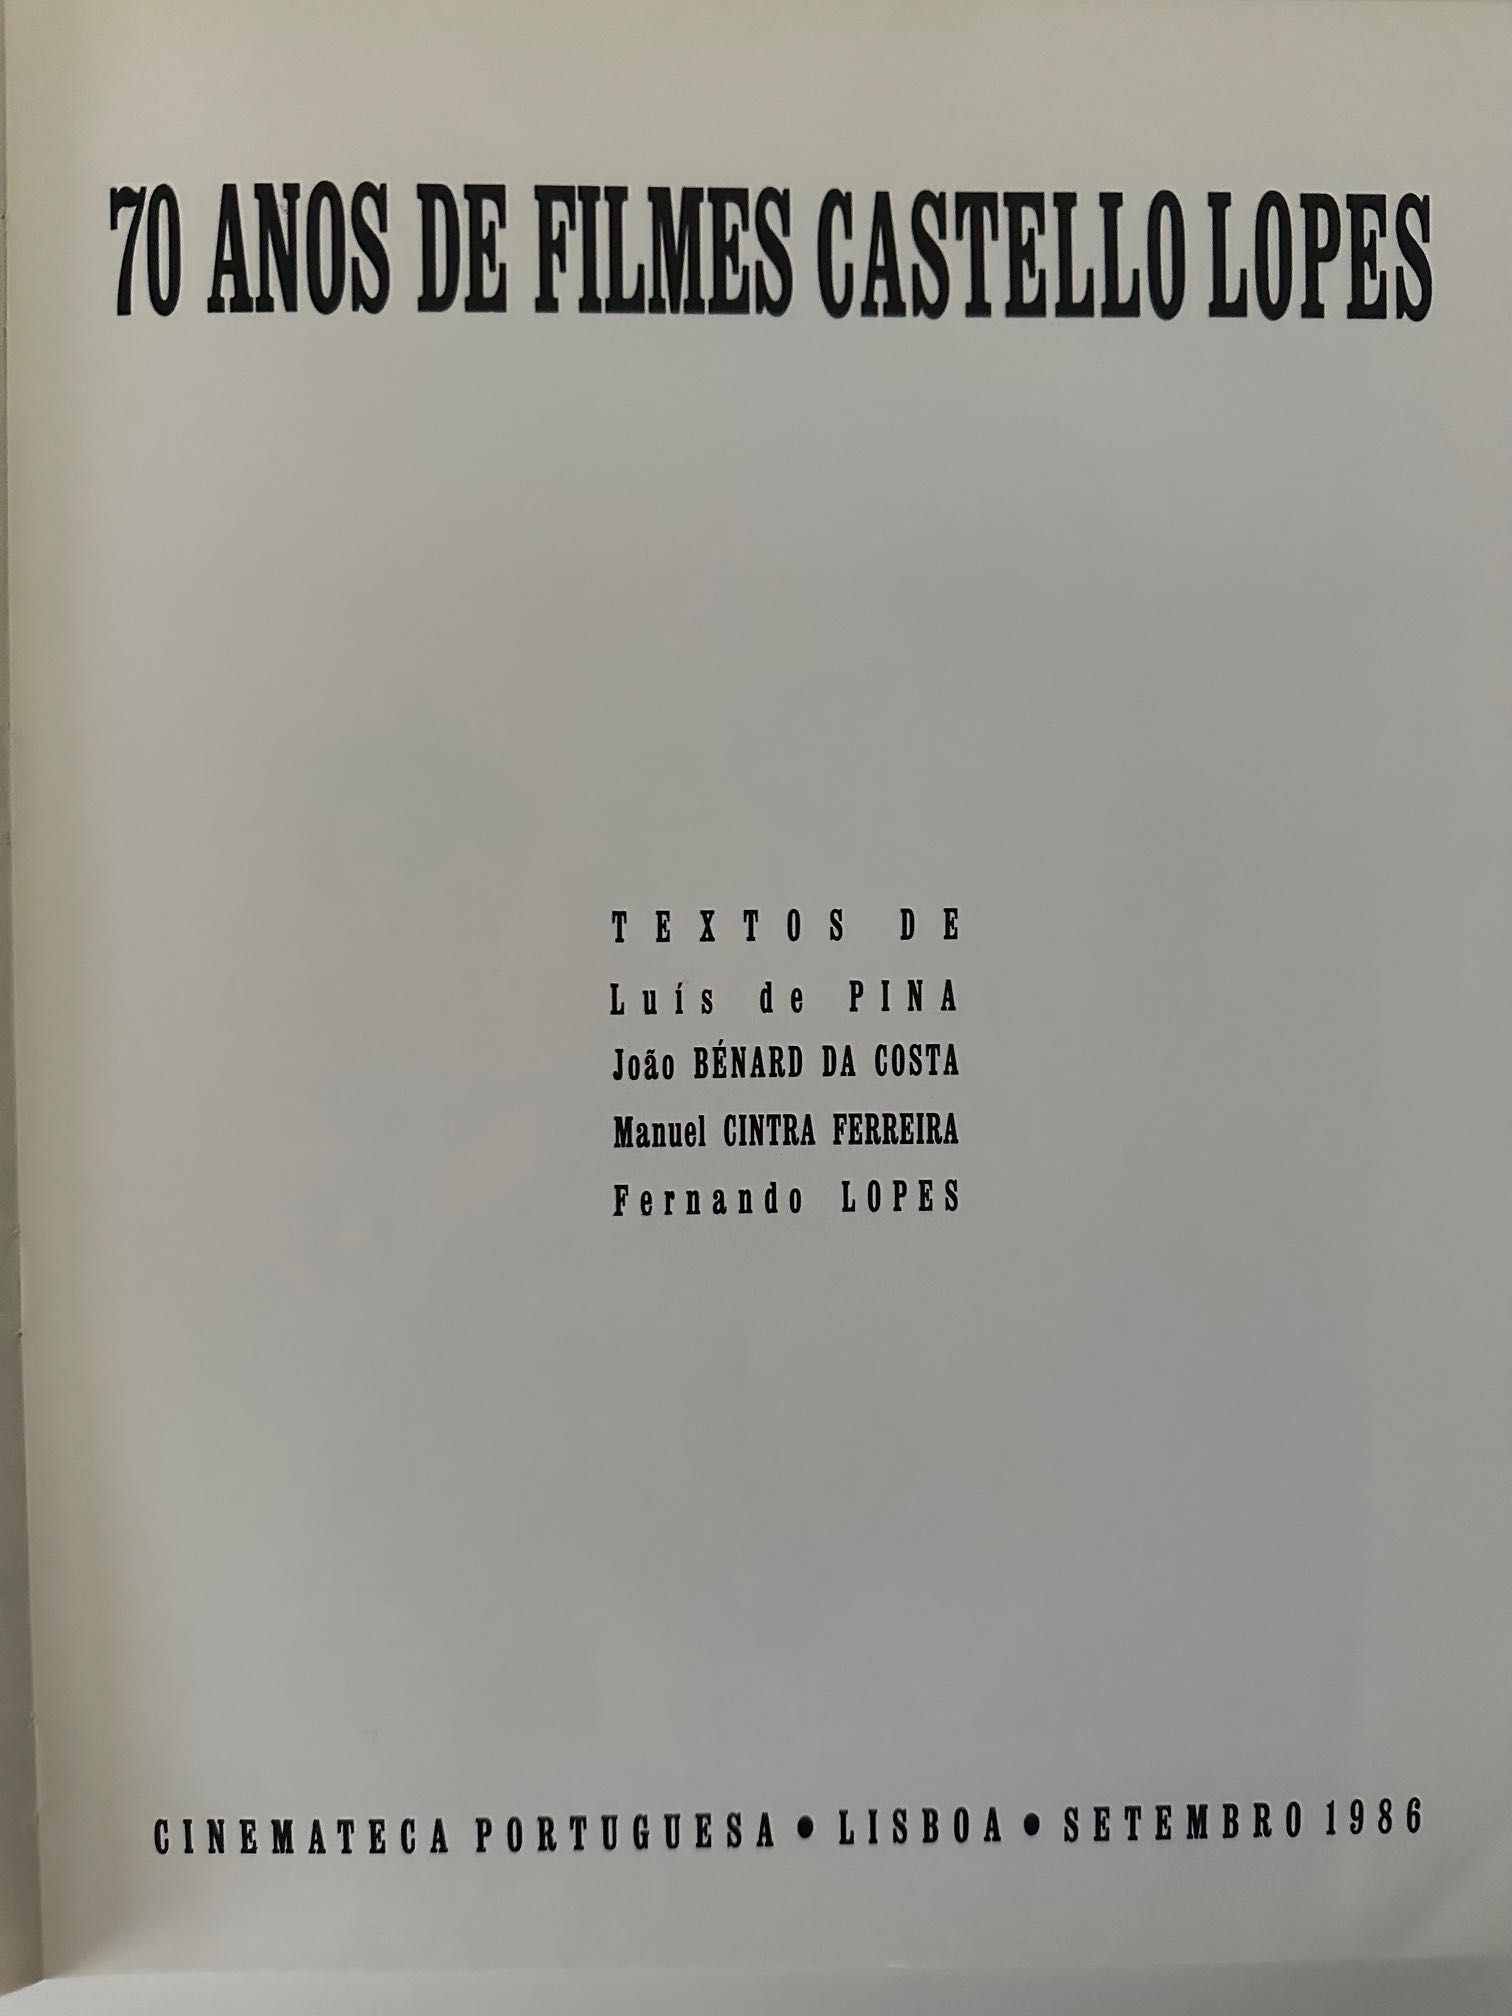 70 Anos de Filmes Castello Lopes - Cinemateca - 1986